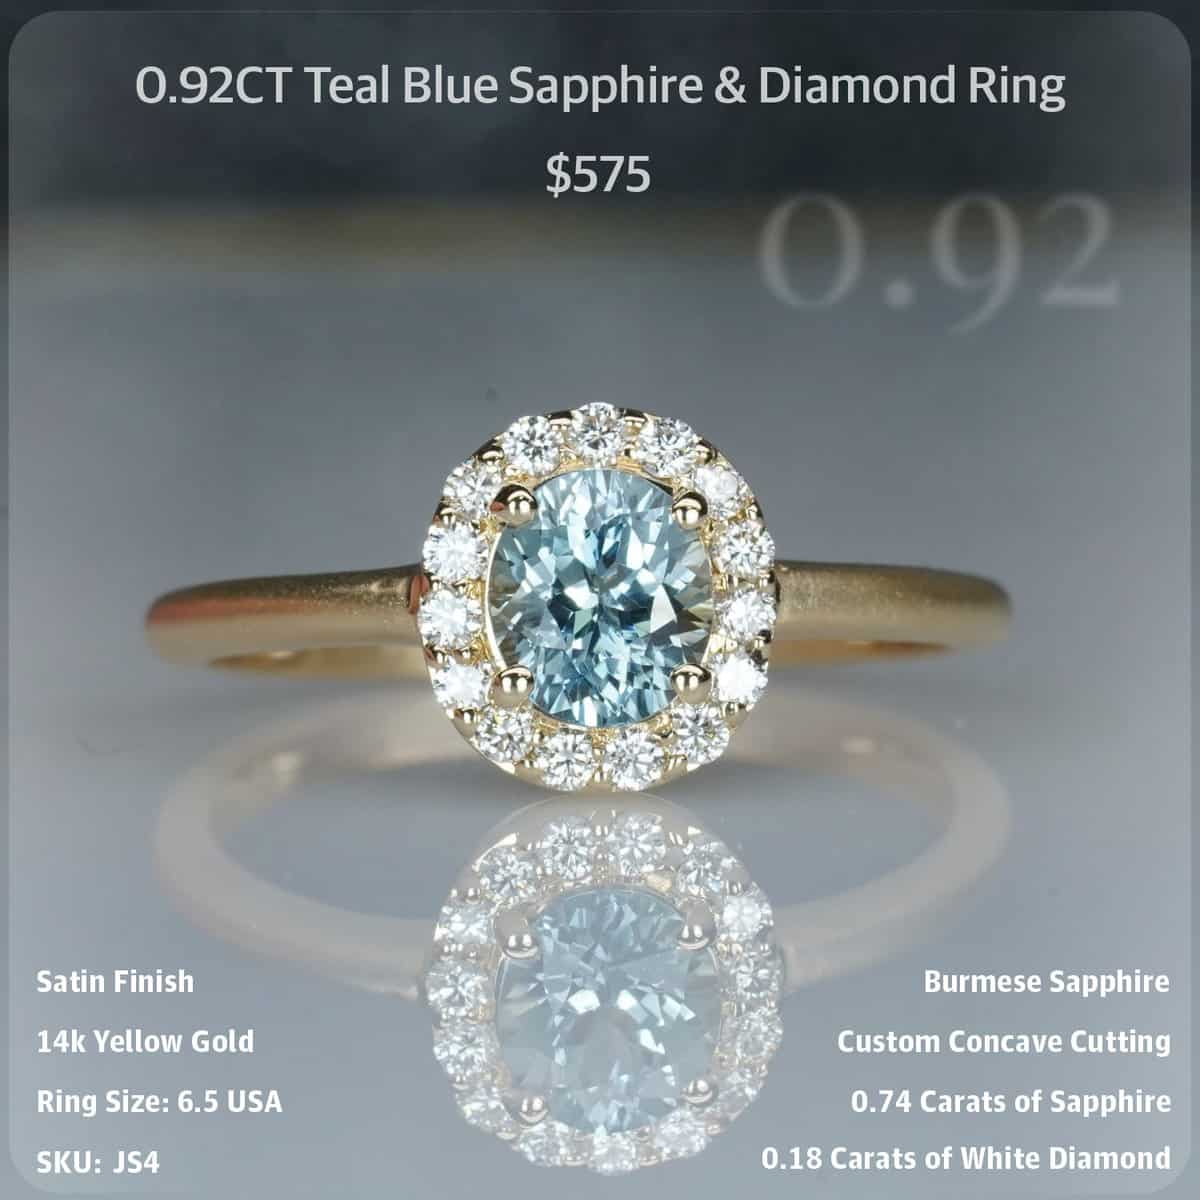 0.92CT Teal Blue Sapphire & Diamond Ring